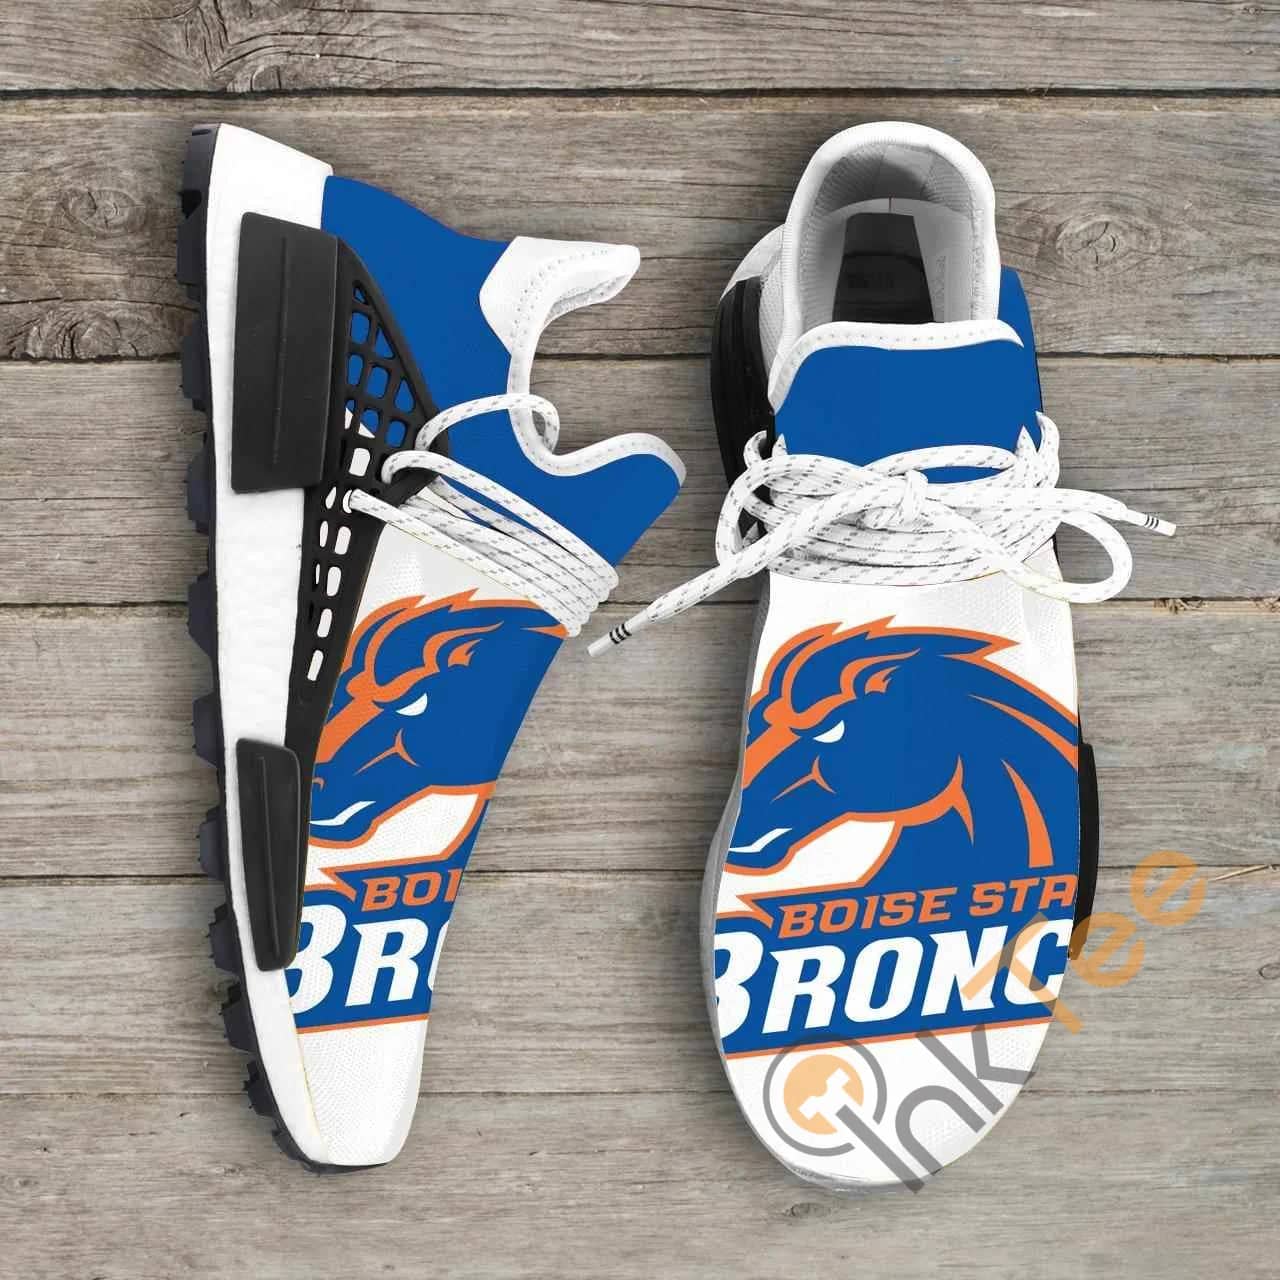 Boise State Broncos Ncaa NMD Human Shoes